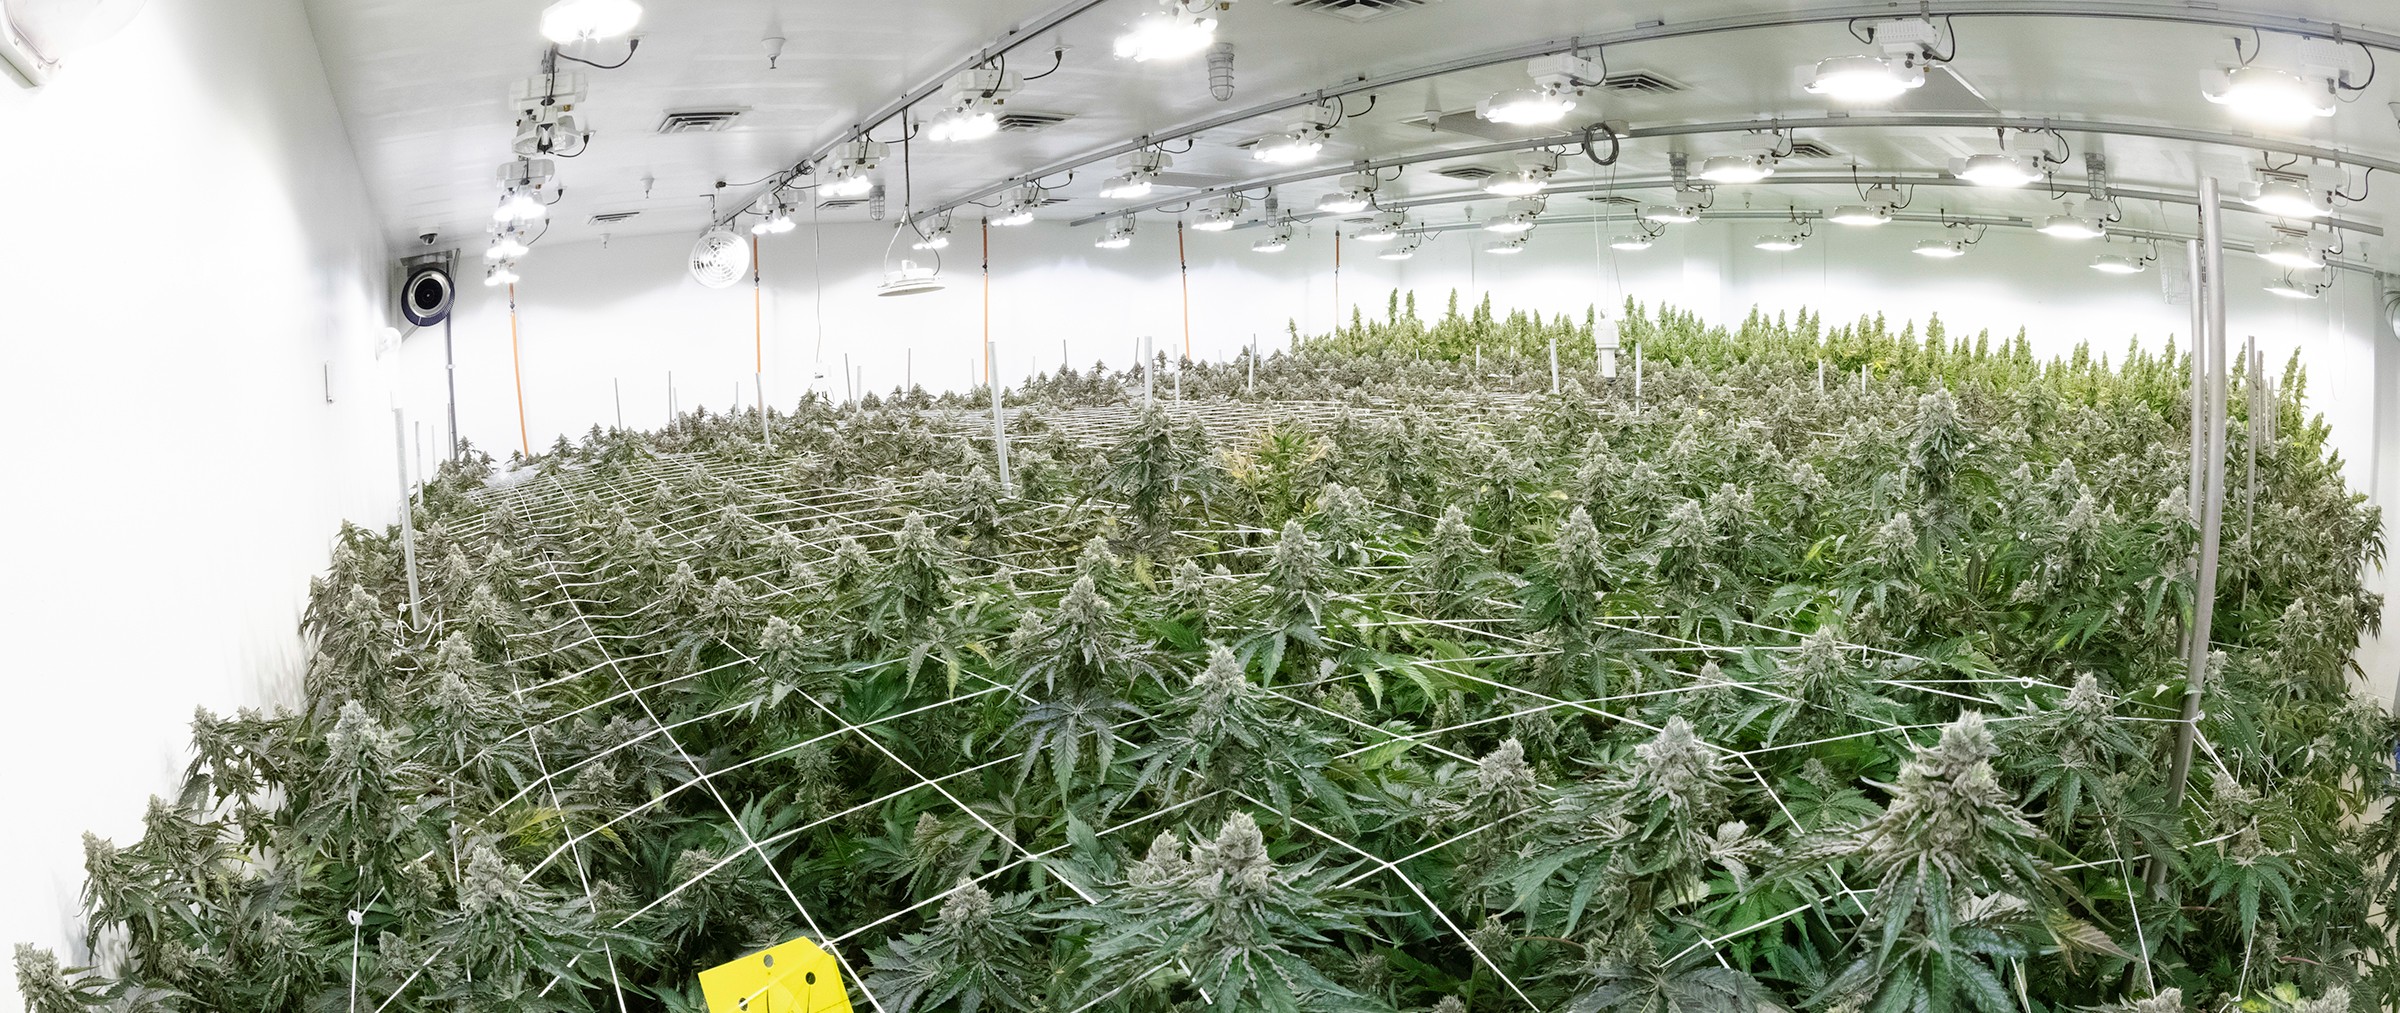 NorCal Cannabis growing facility